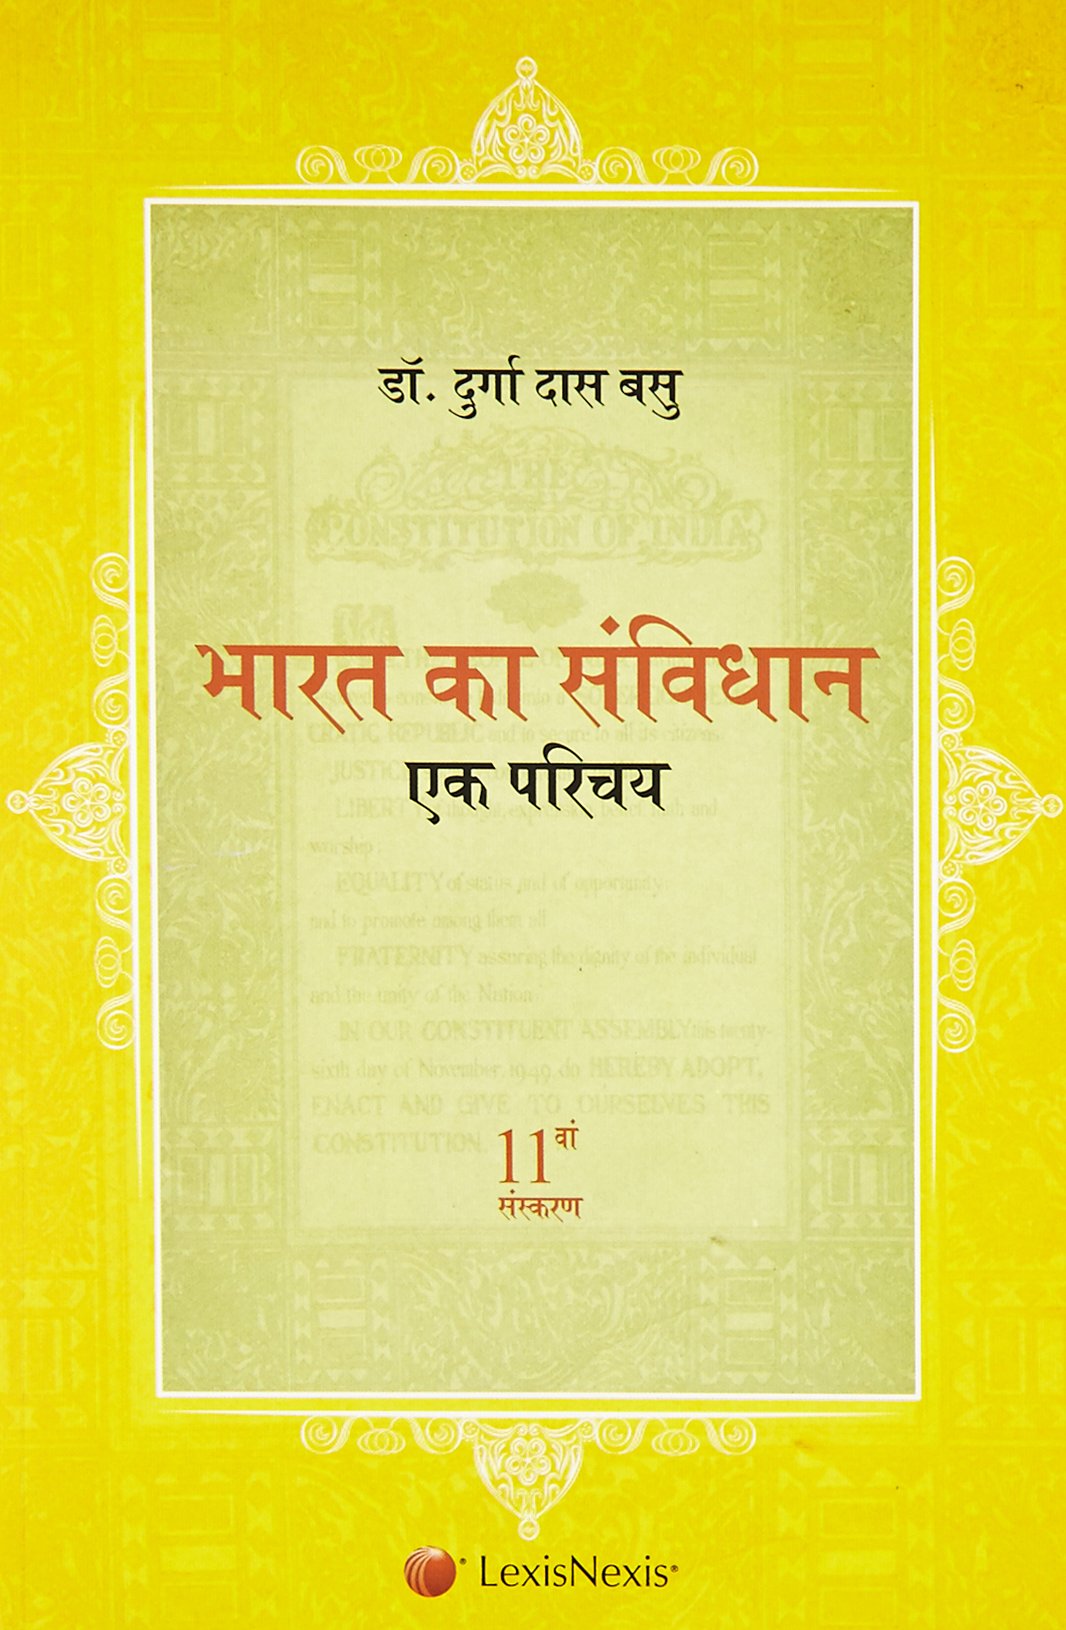 Indian Constitution By Dd Basu In Hindi Pdf Free Download - freelancelasopa